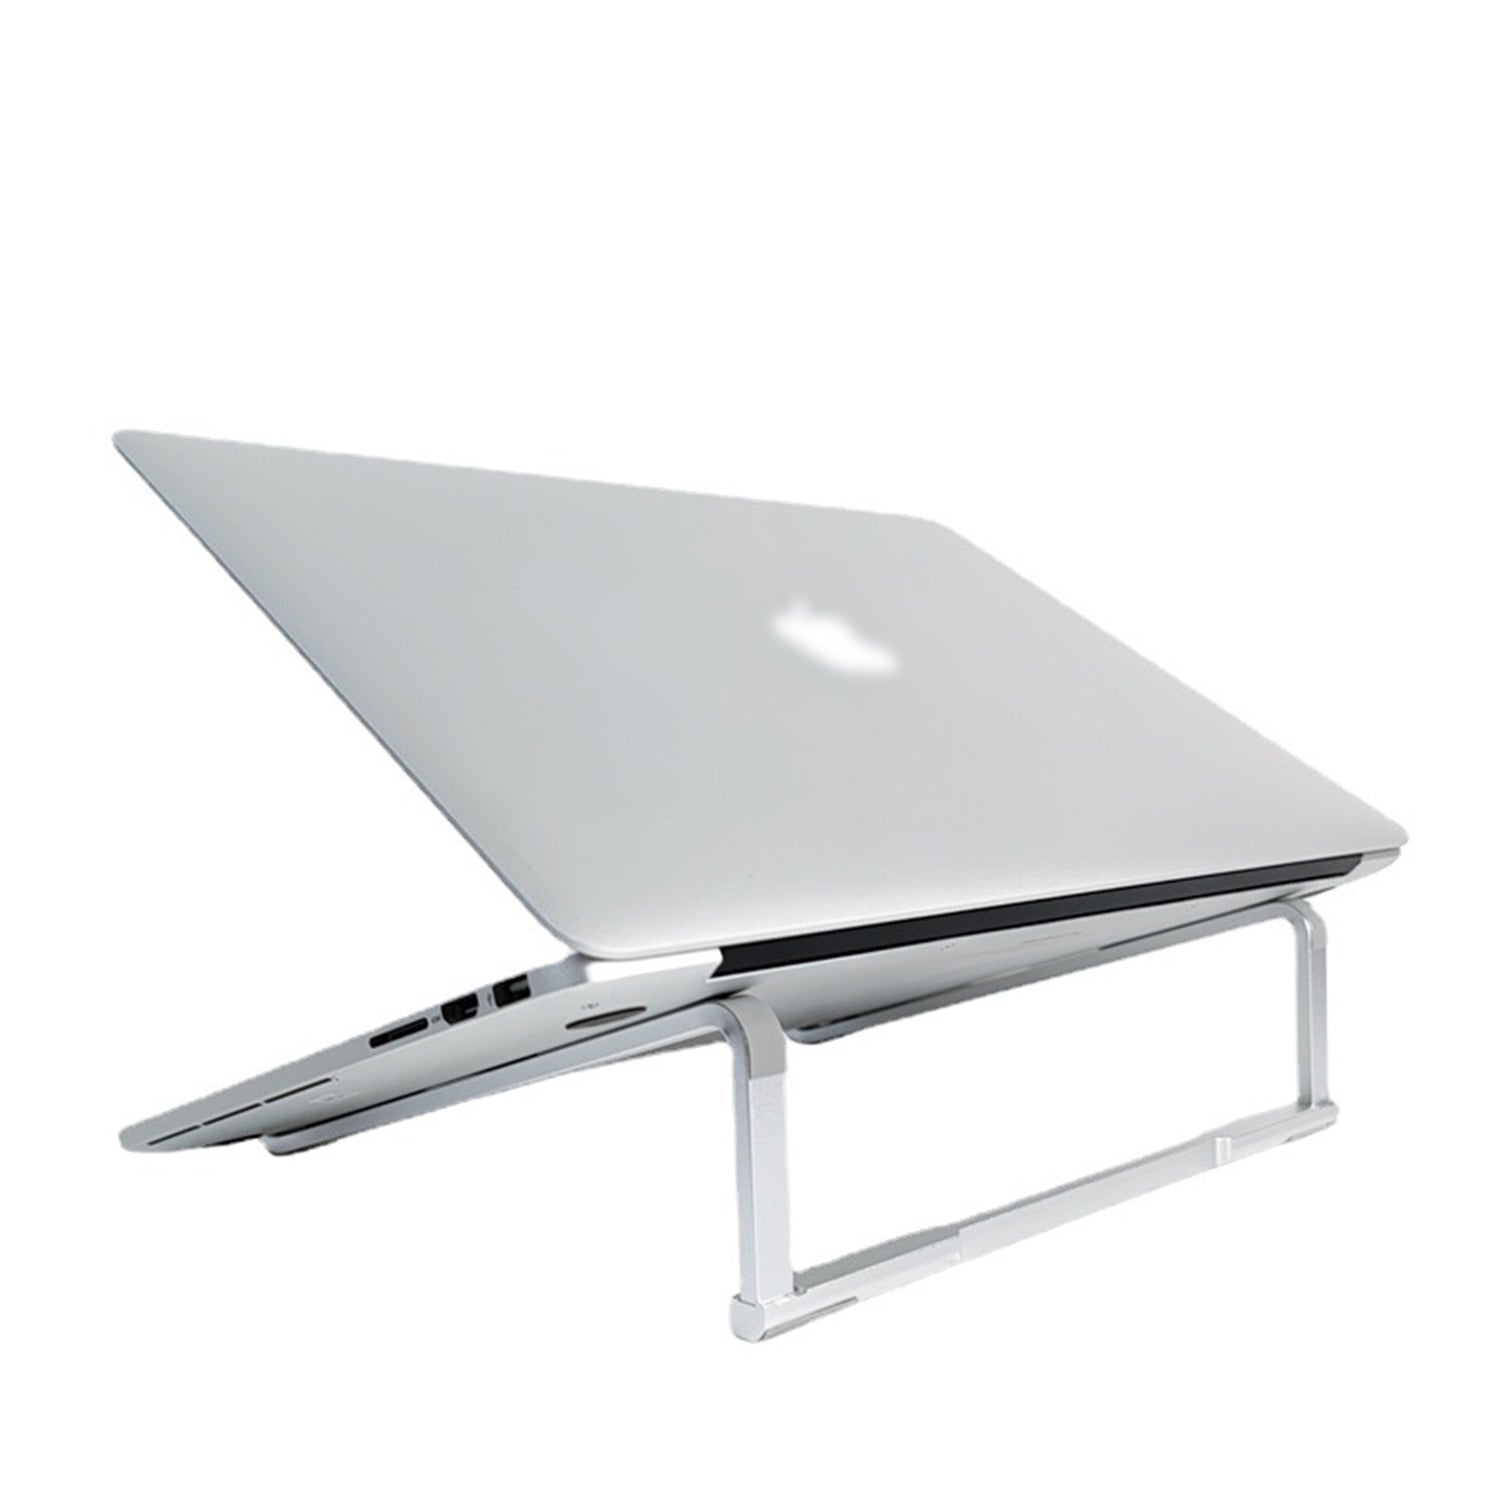 MacBook bracket aluminum alloy receptacle bracket heat dissipation increased folding